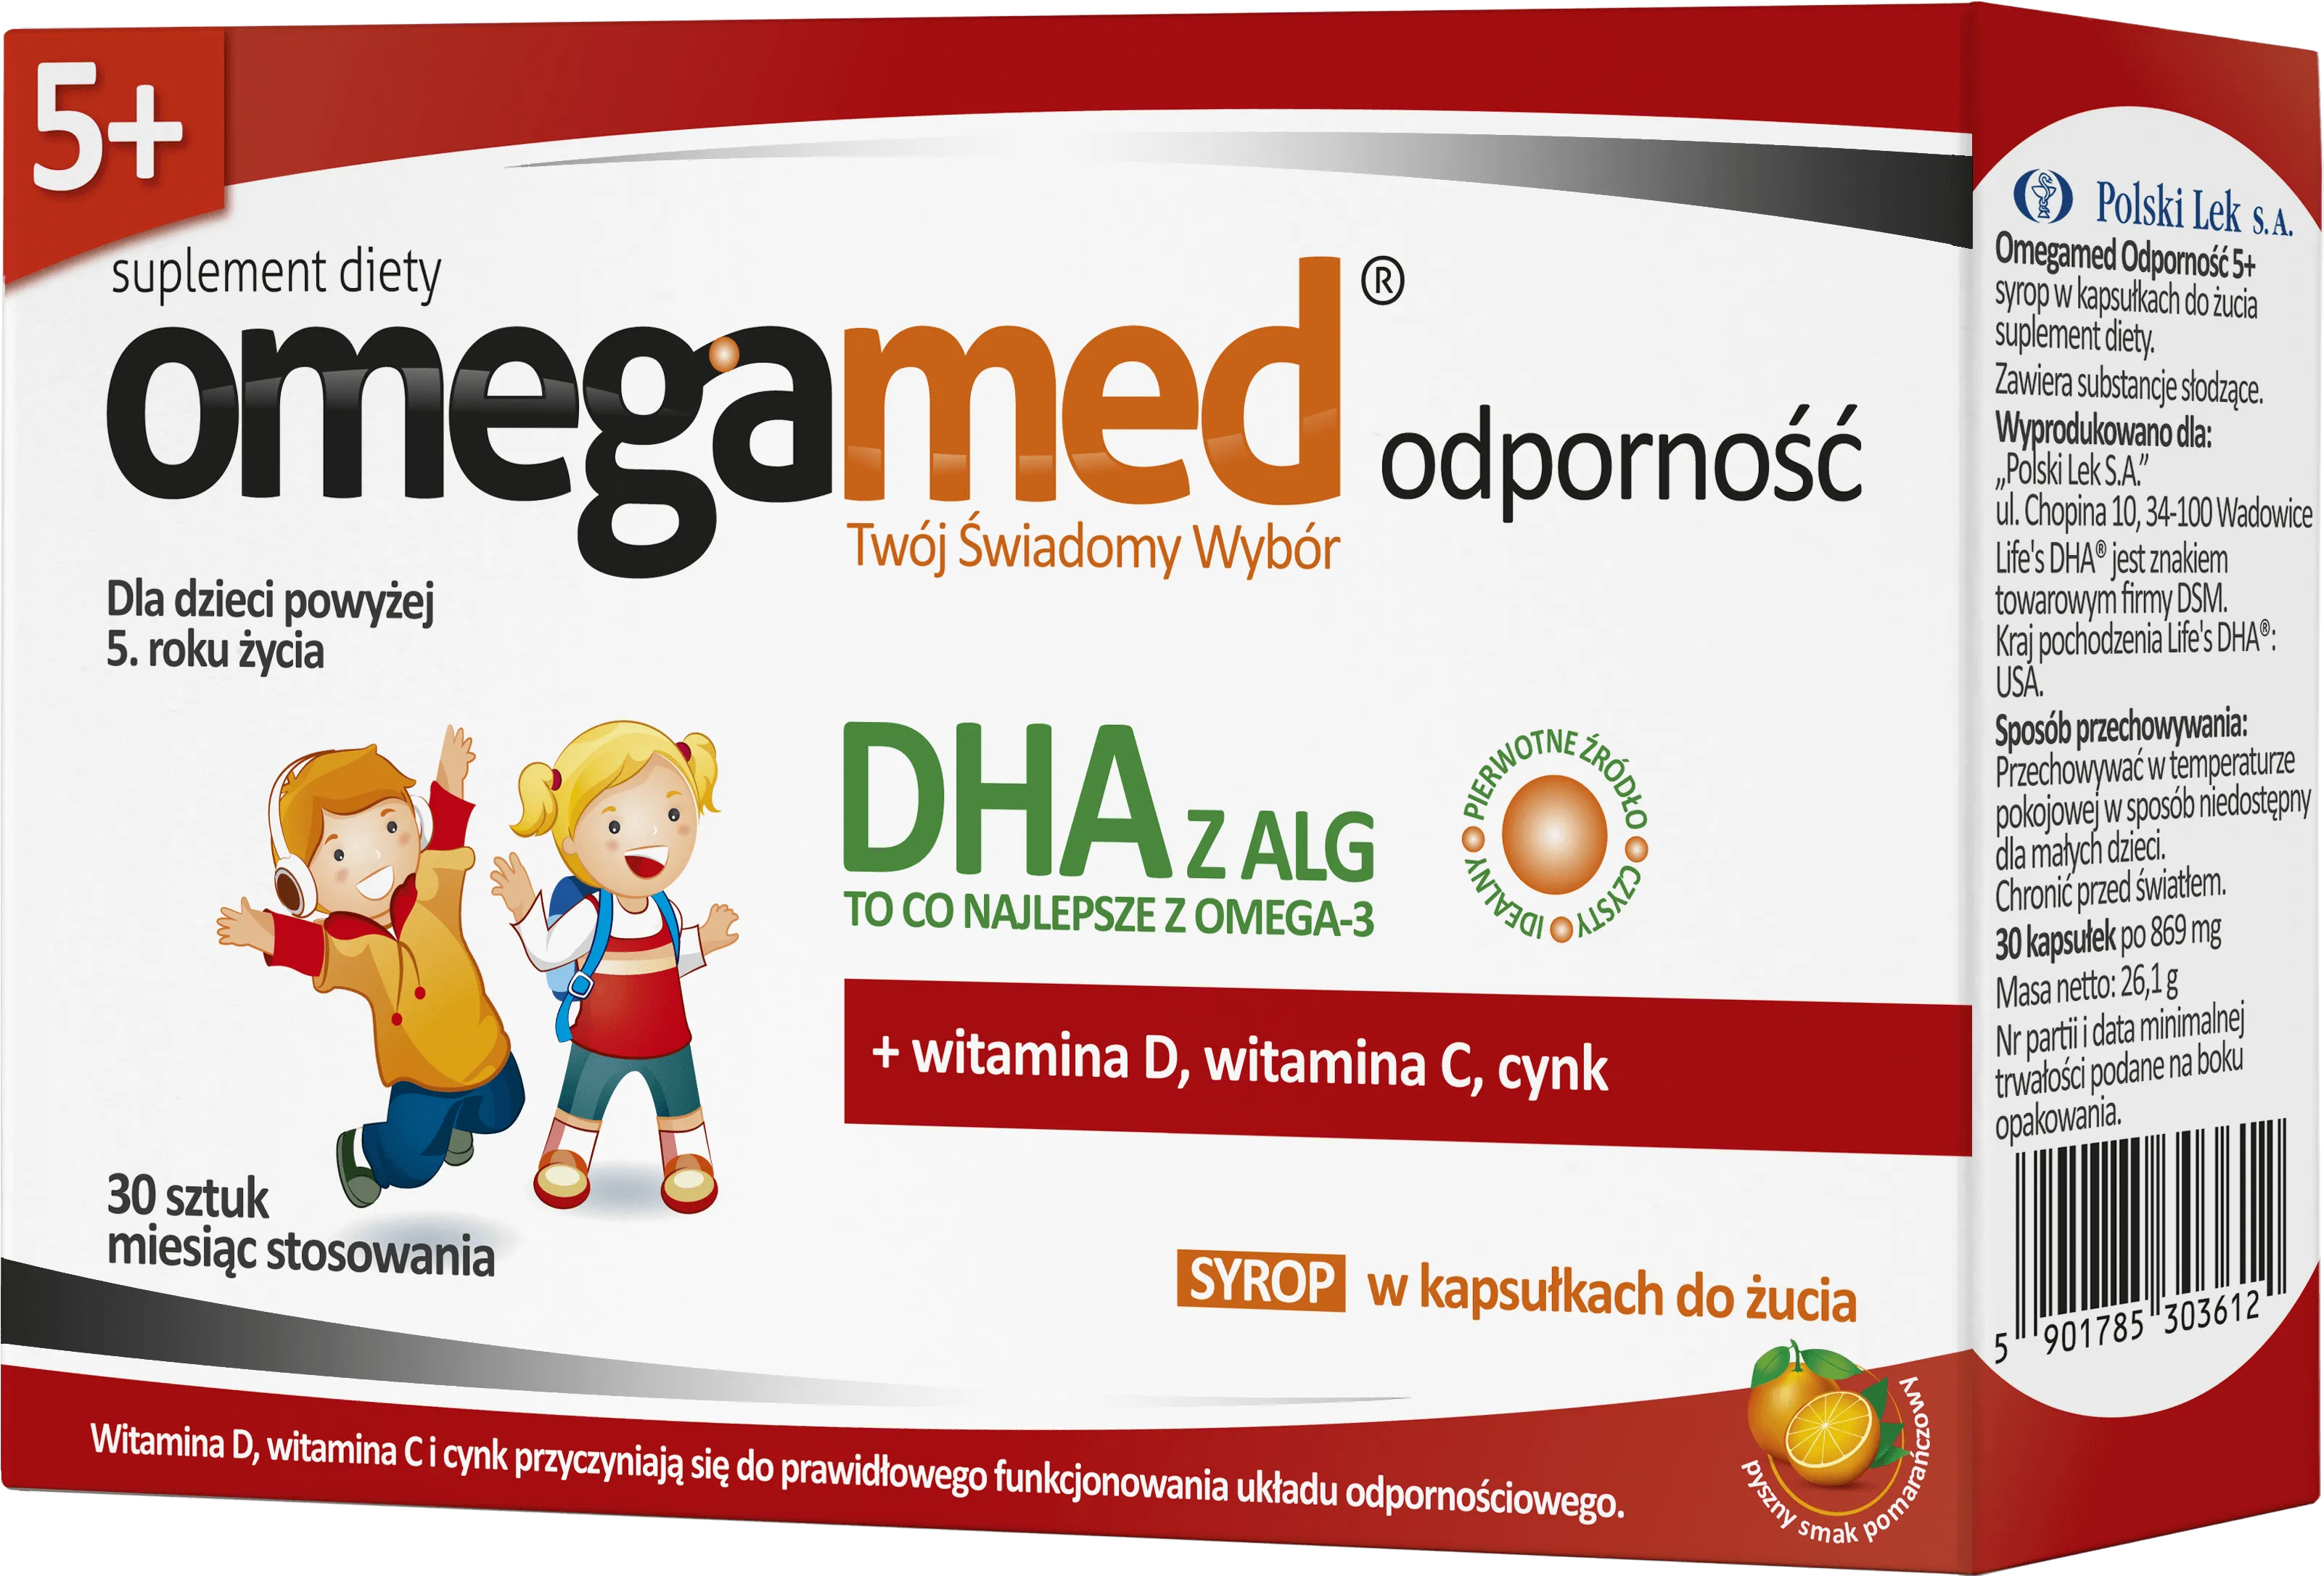 Omegamed Odporność 5+, suplement diety, 30 kapsułek do żucia